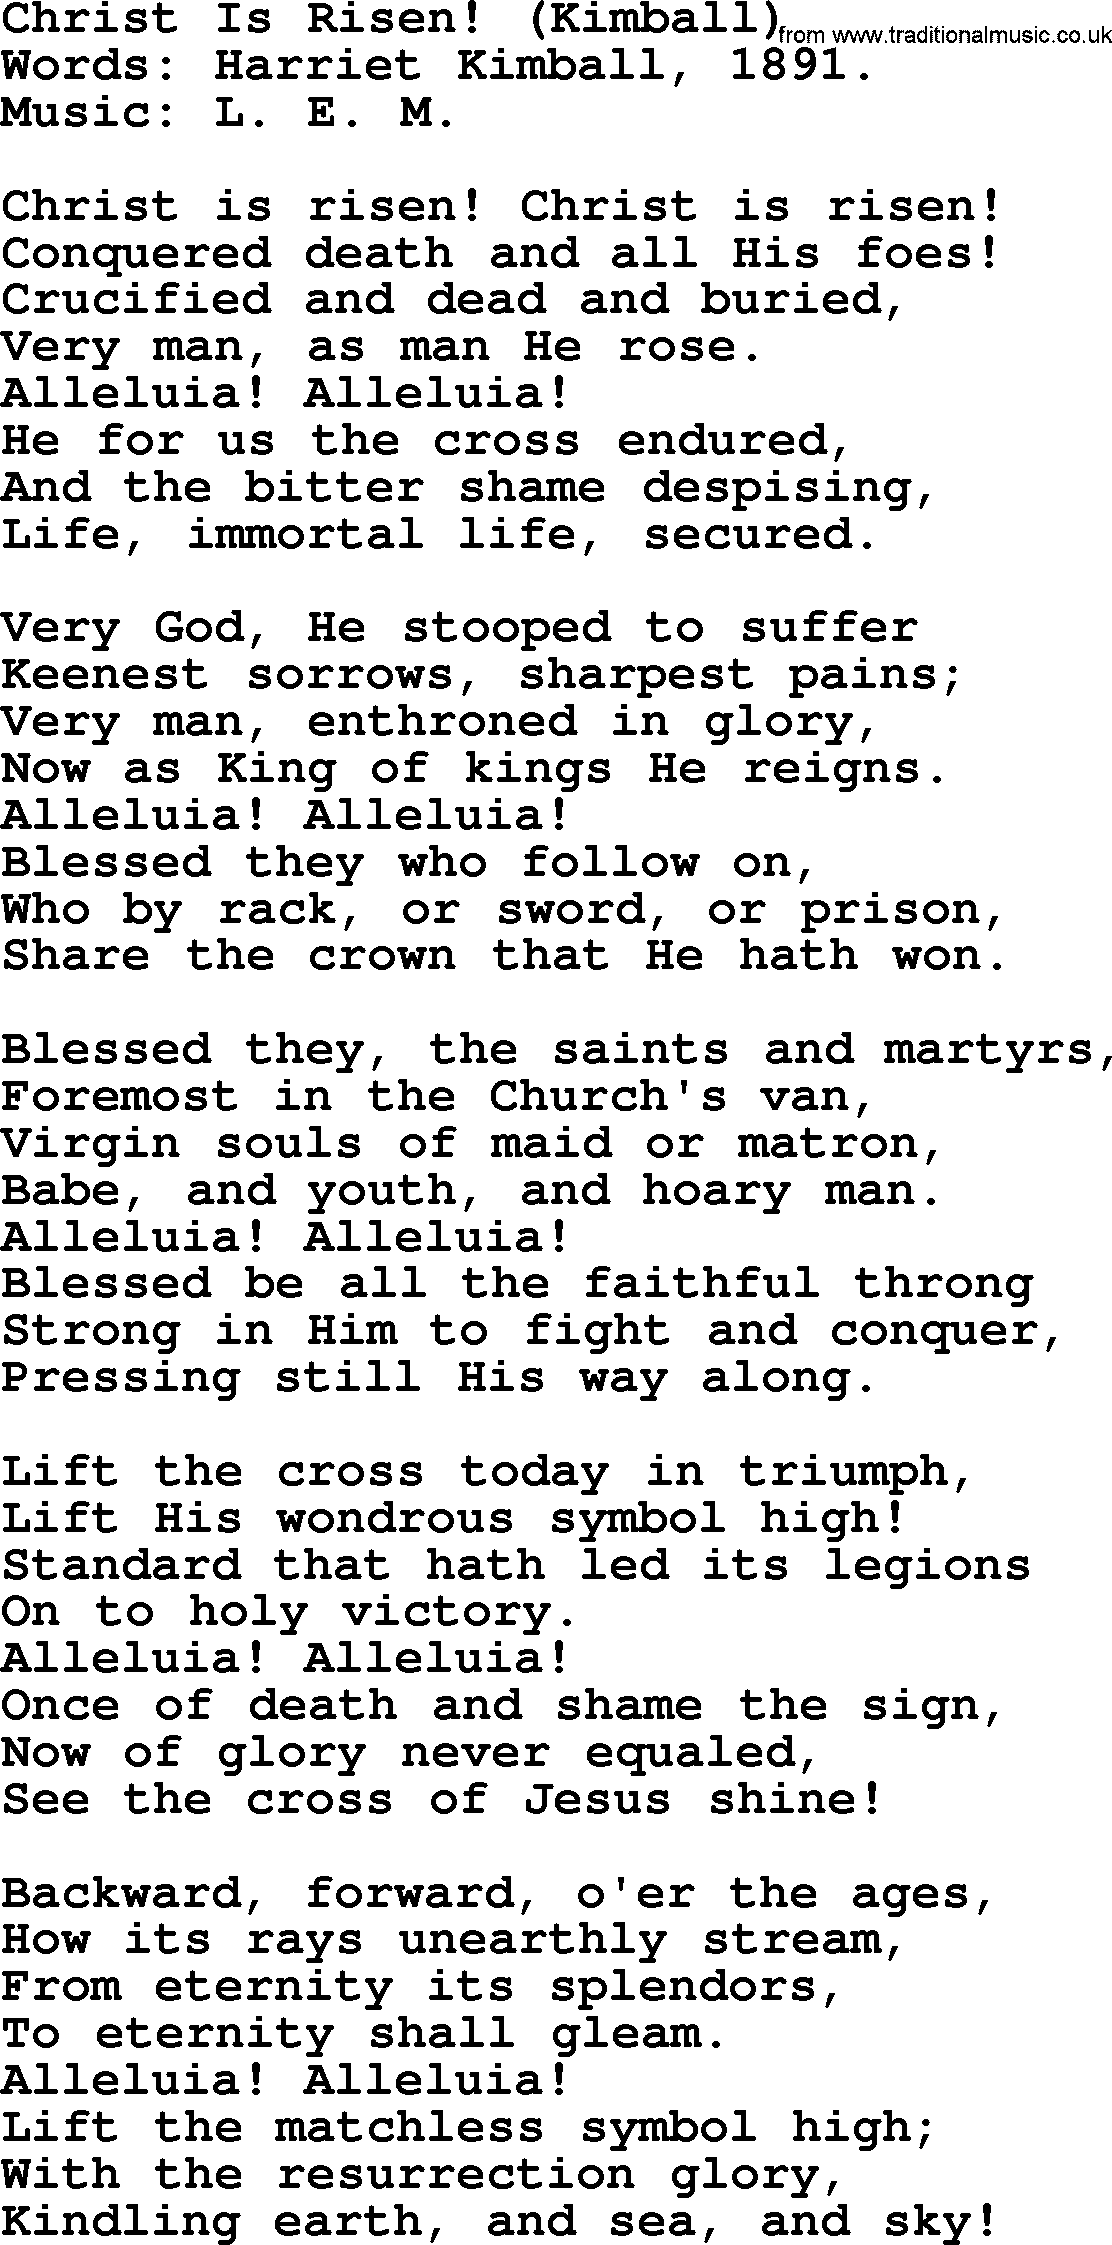 Easter Hymns, Hymn: Christ Is Risen! (kimball), lyrics with PDF